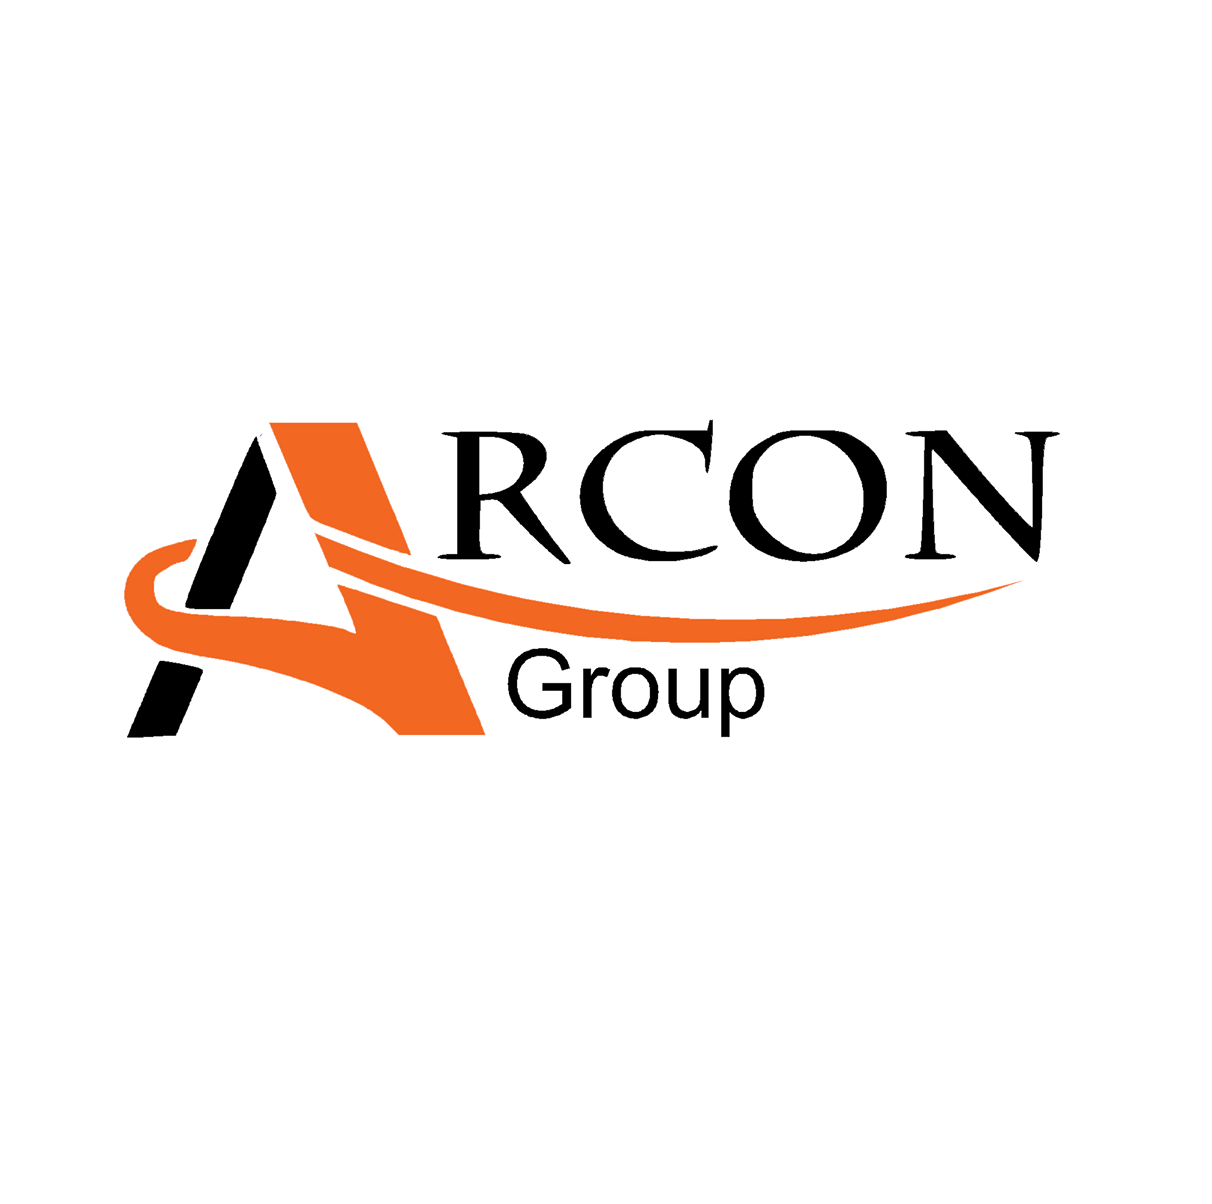 Arcon Group Company